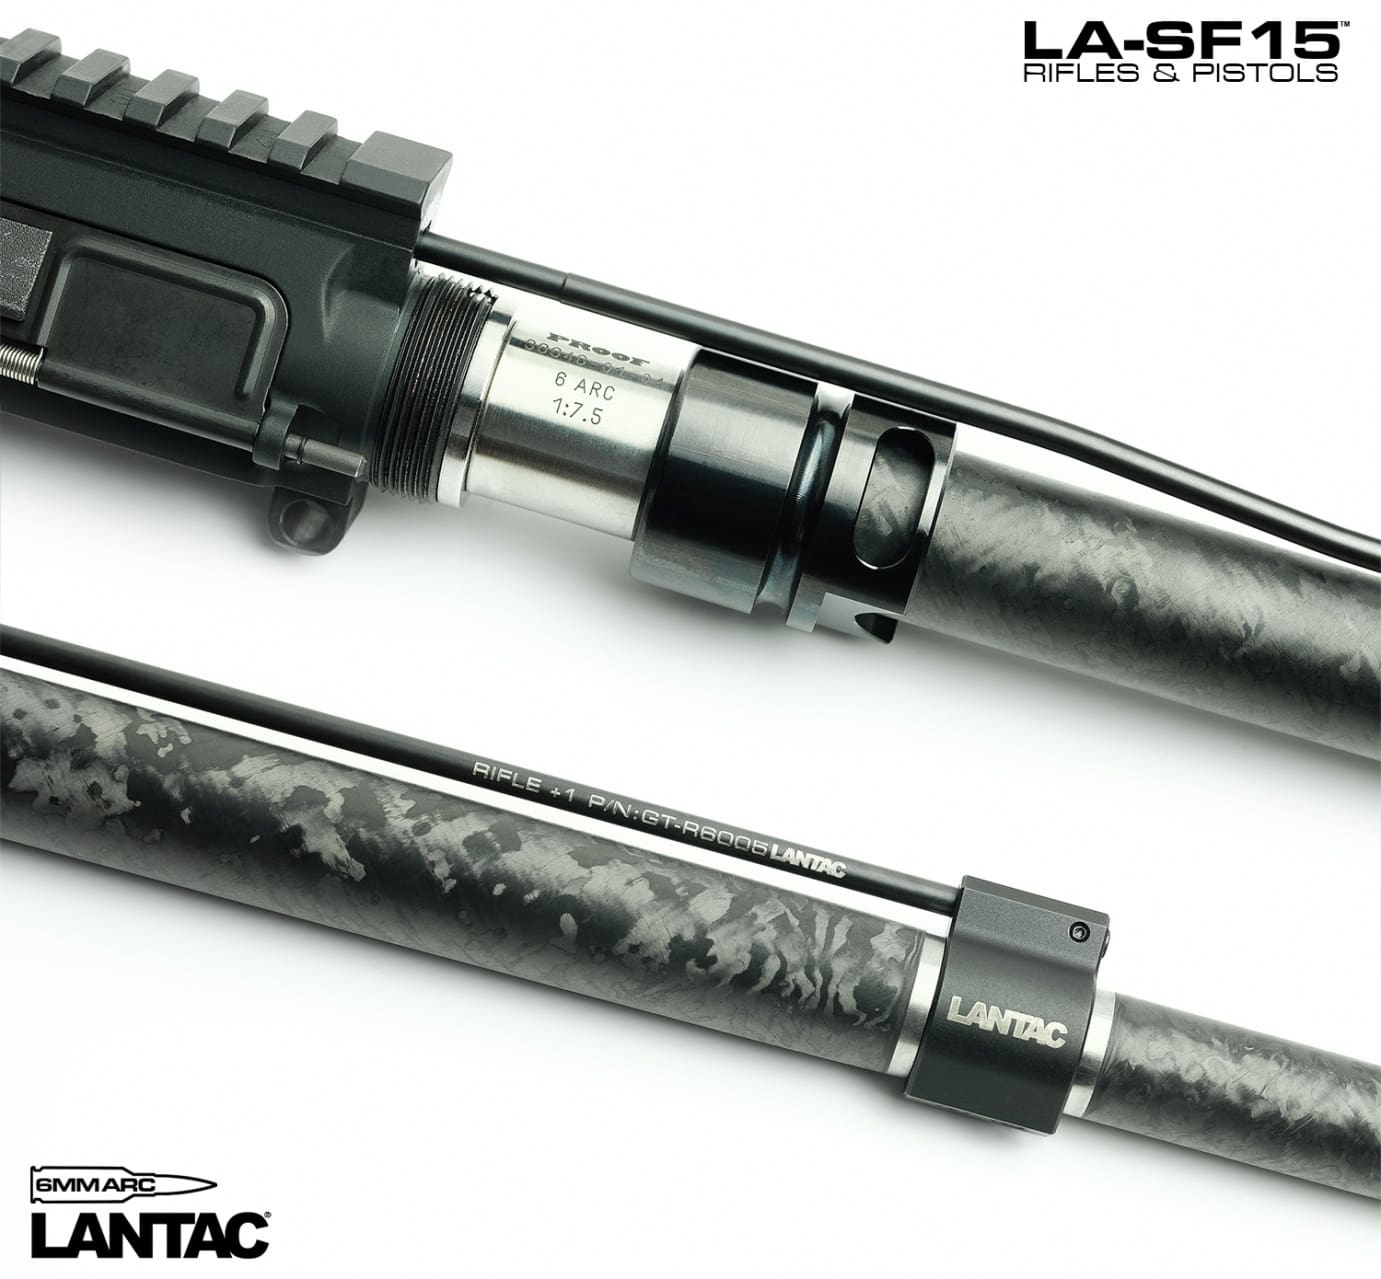 Lantac LA-SF15TM 6MM ARC Chambered Rifle & Dedicated E-BCG.